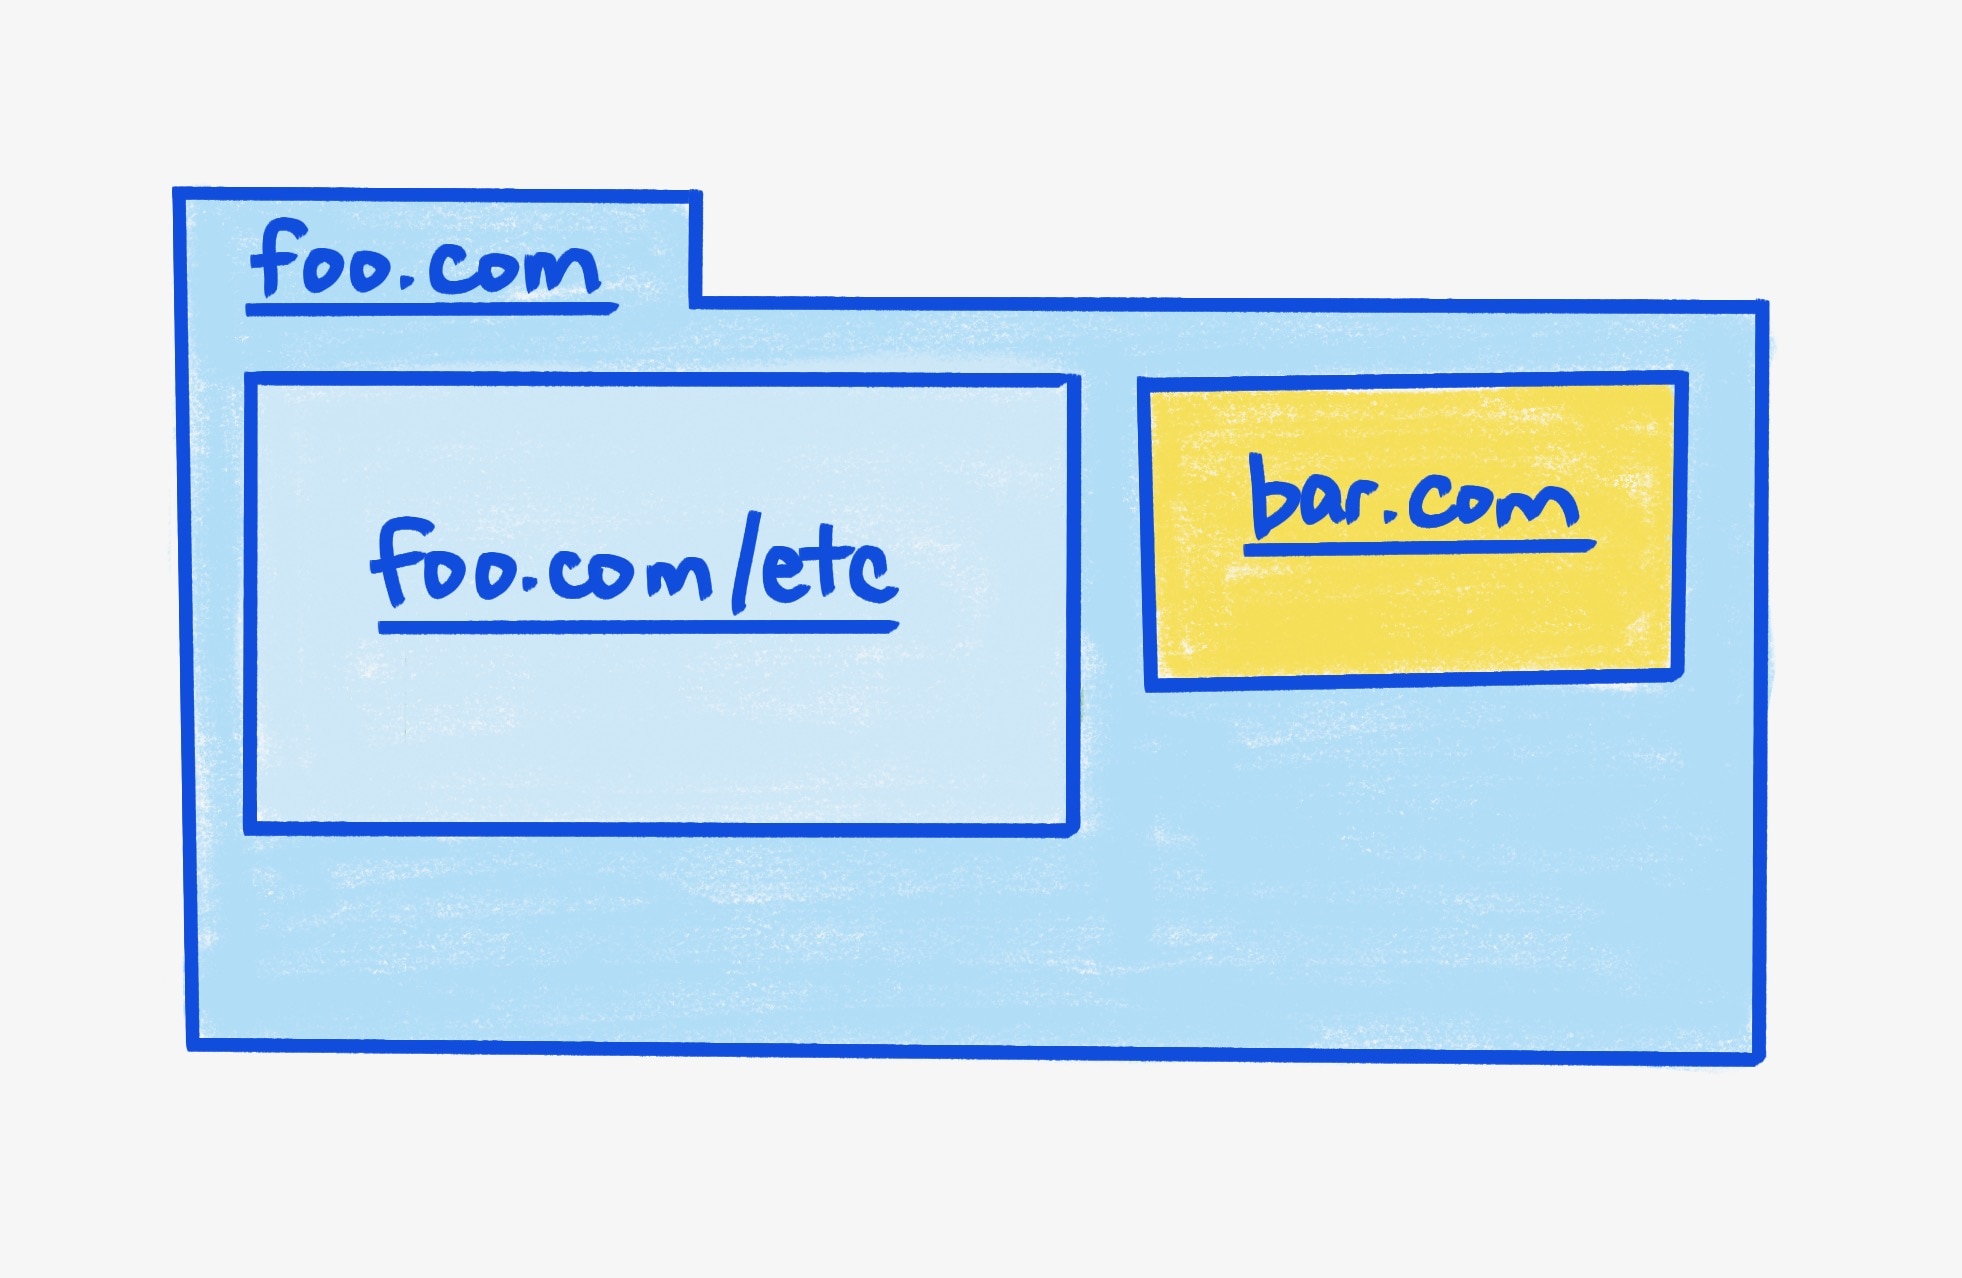 上層頁框 foo.com，包含兩個 iframe。